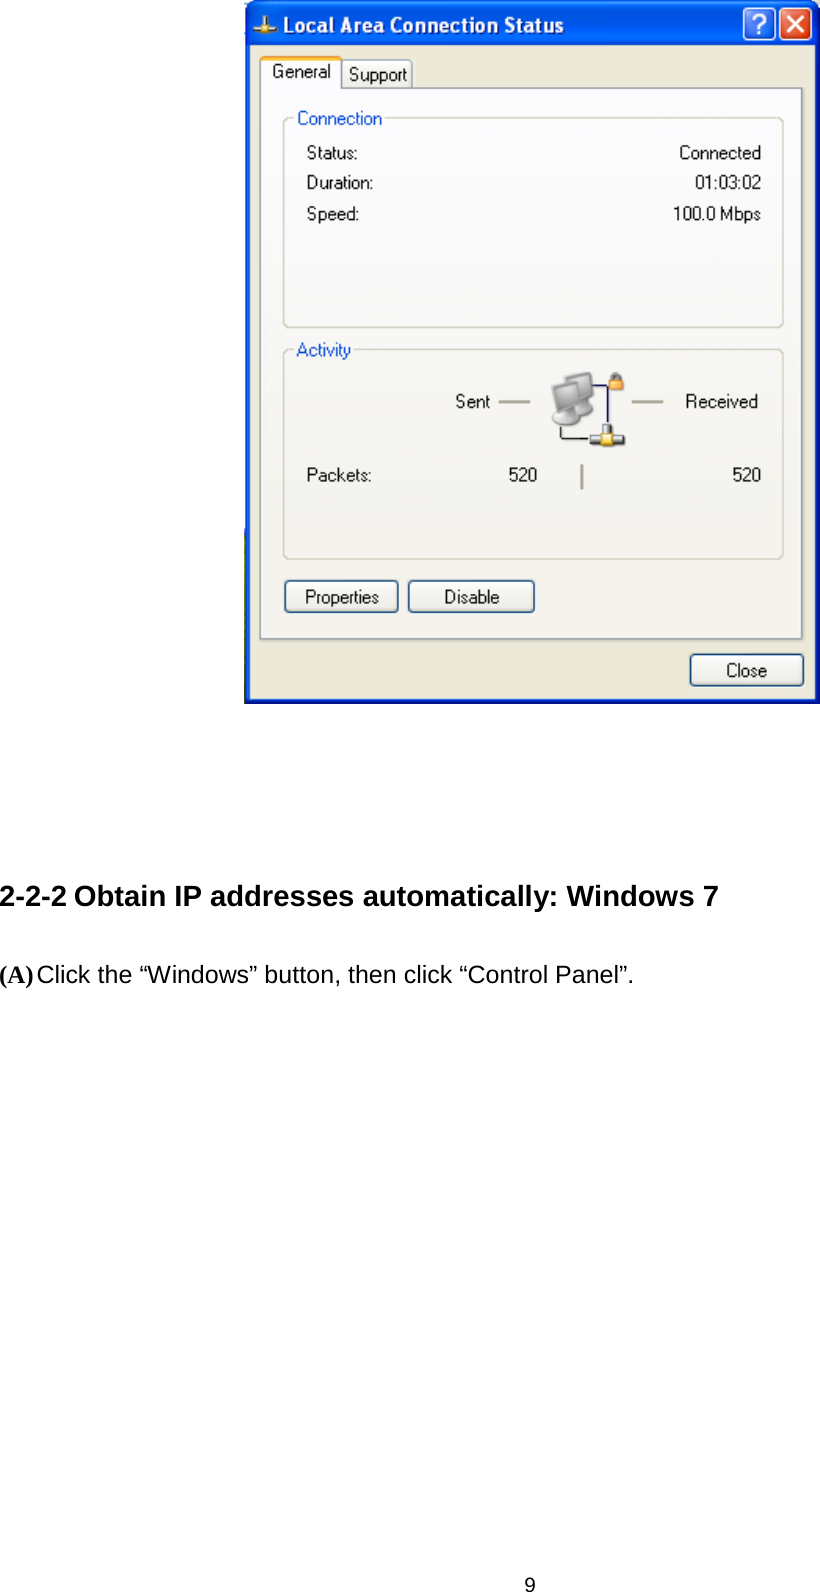 9      2-2-2 Obtain IP addresses automatically: Windows 7 (A) Click the “Windows” button, then click “Control Panel”.    